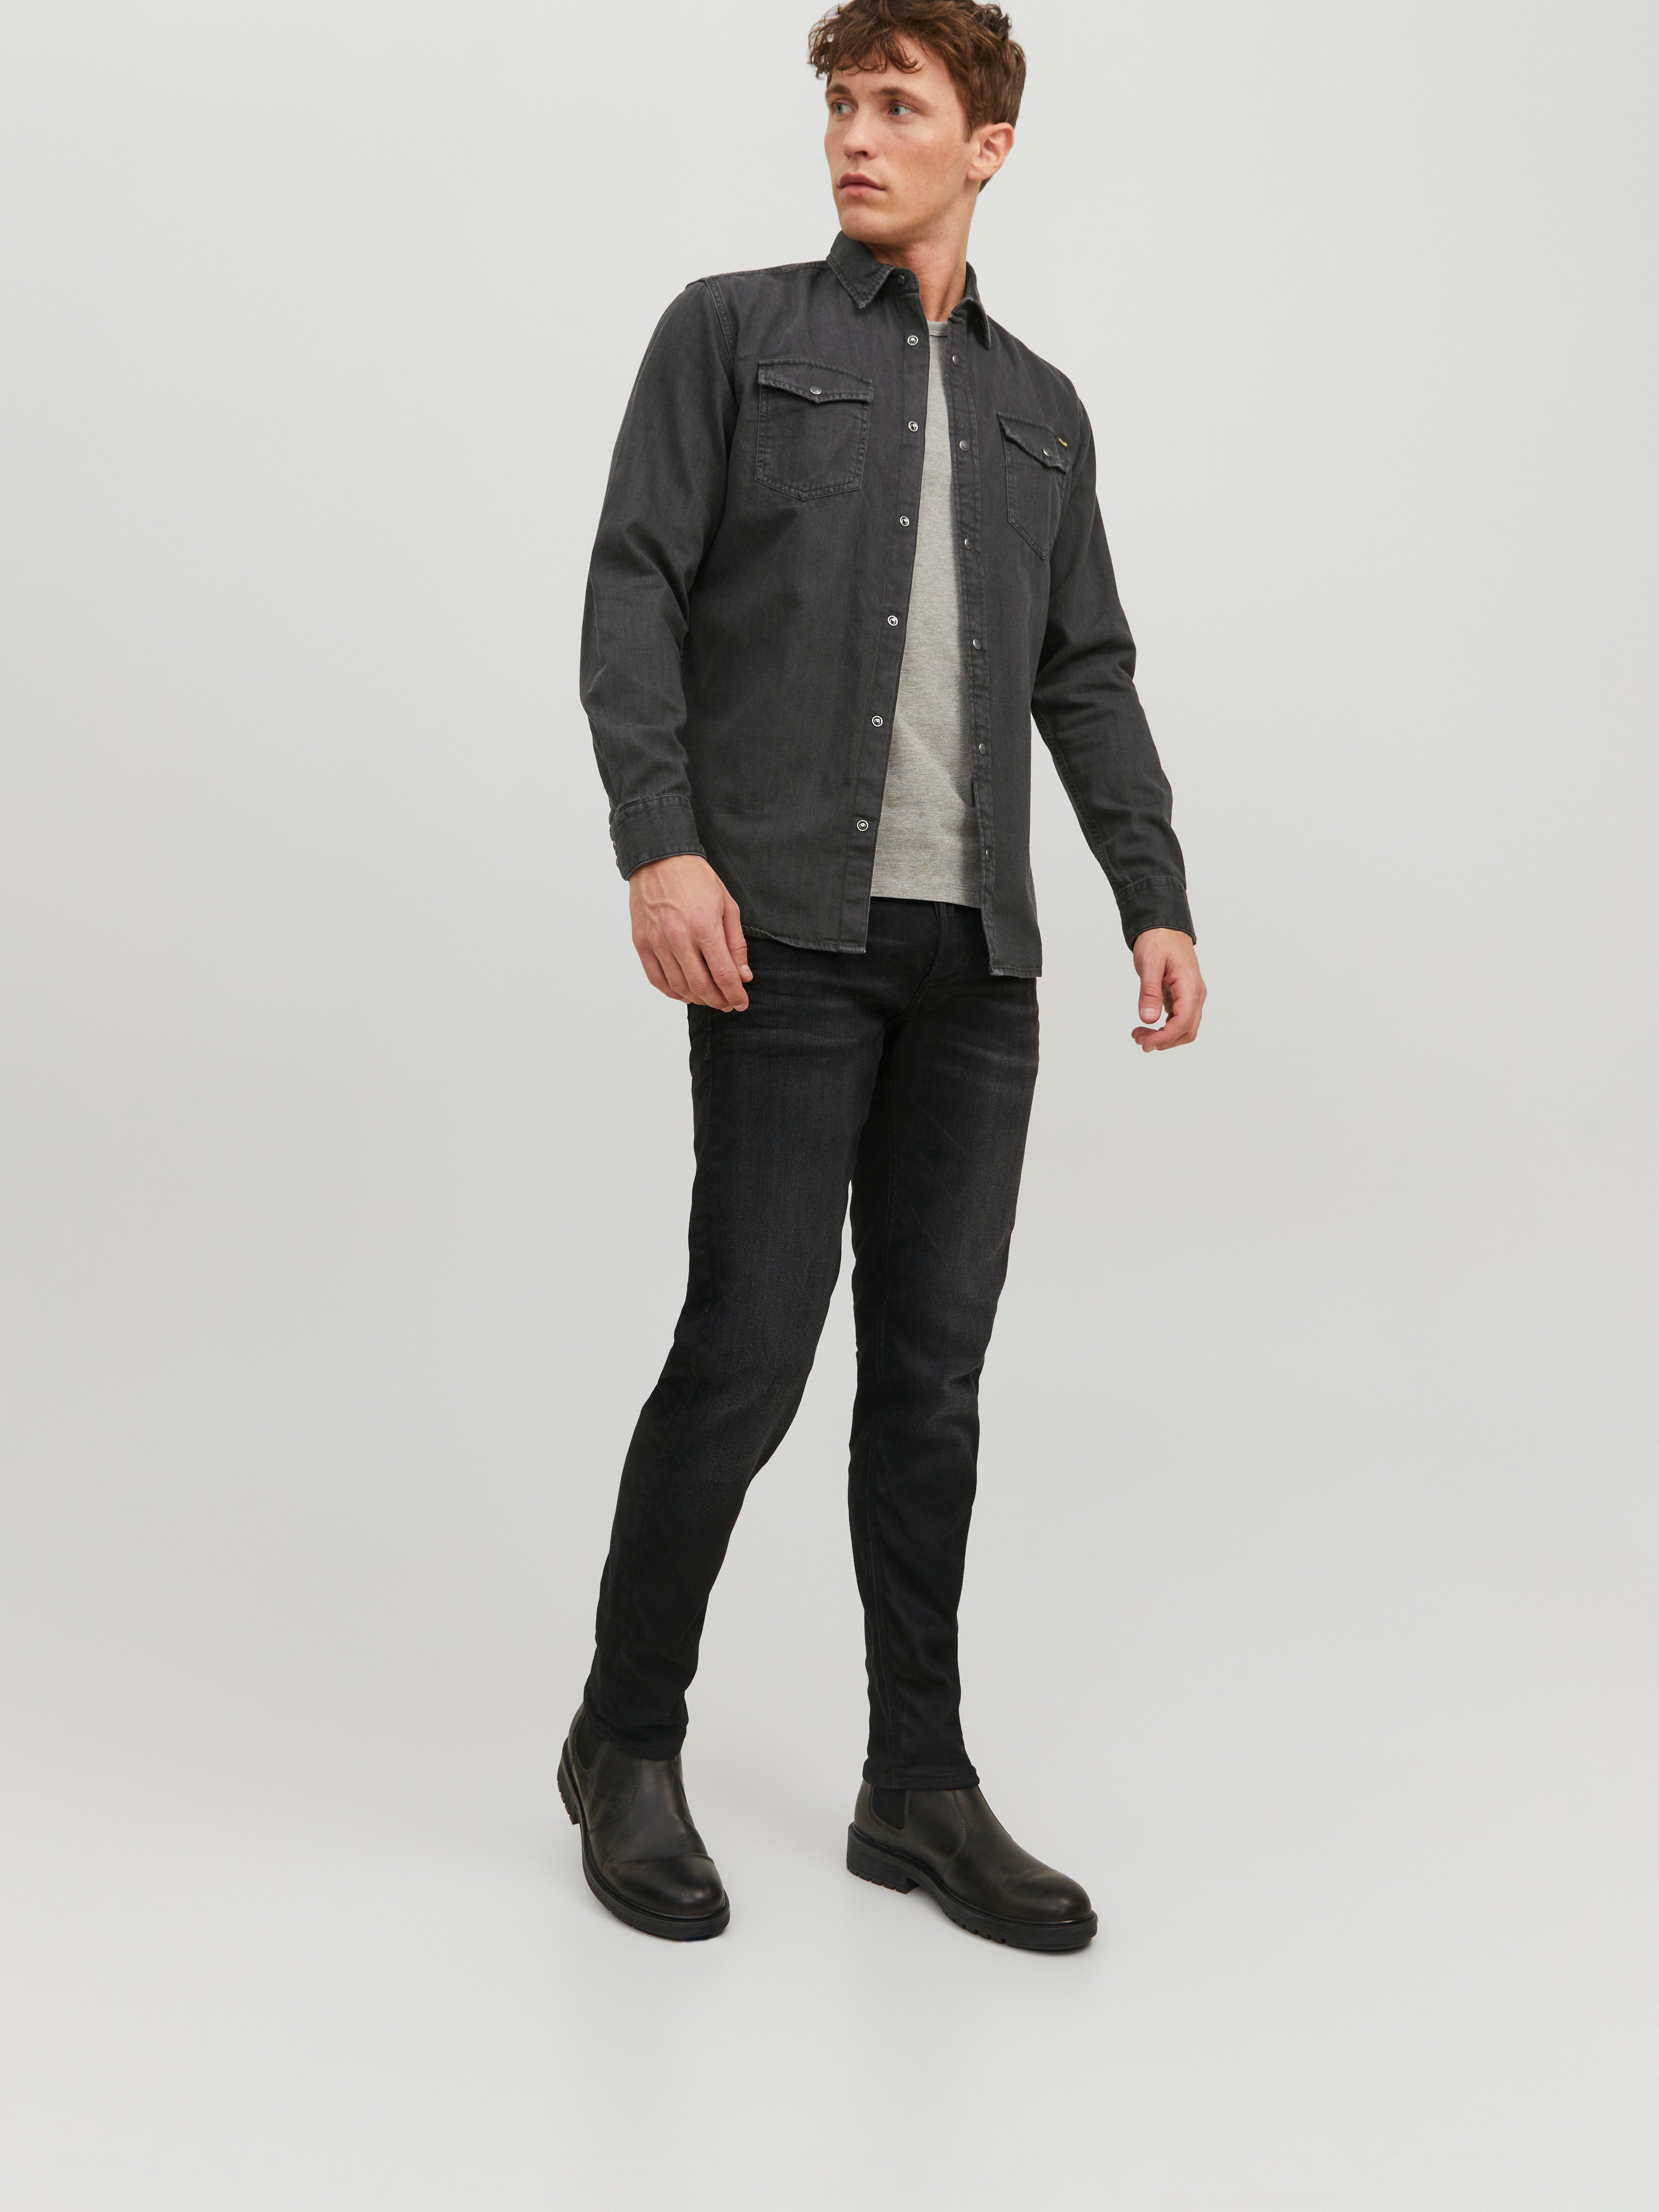 Black Denim Shirt - 7oz : Made To Measure Custom Jeans For Men & Women,  MakeYourOwnJeans®